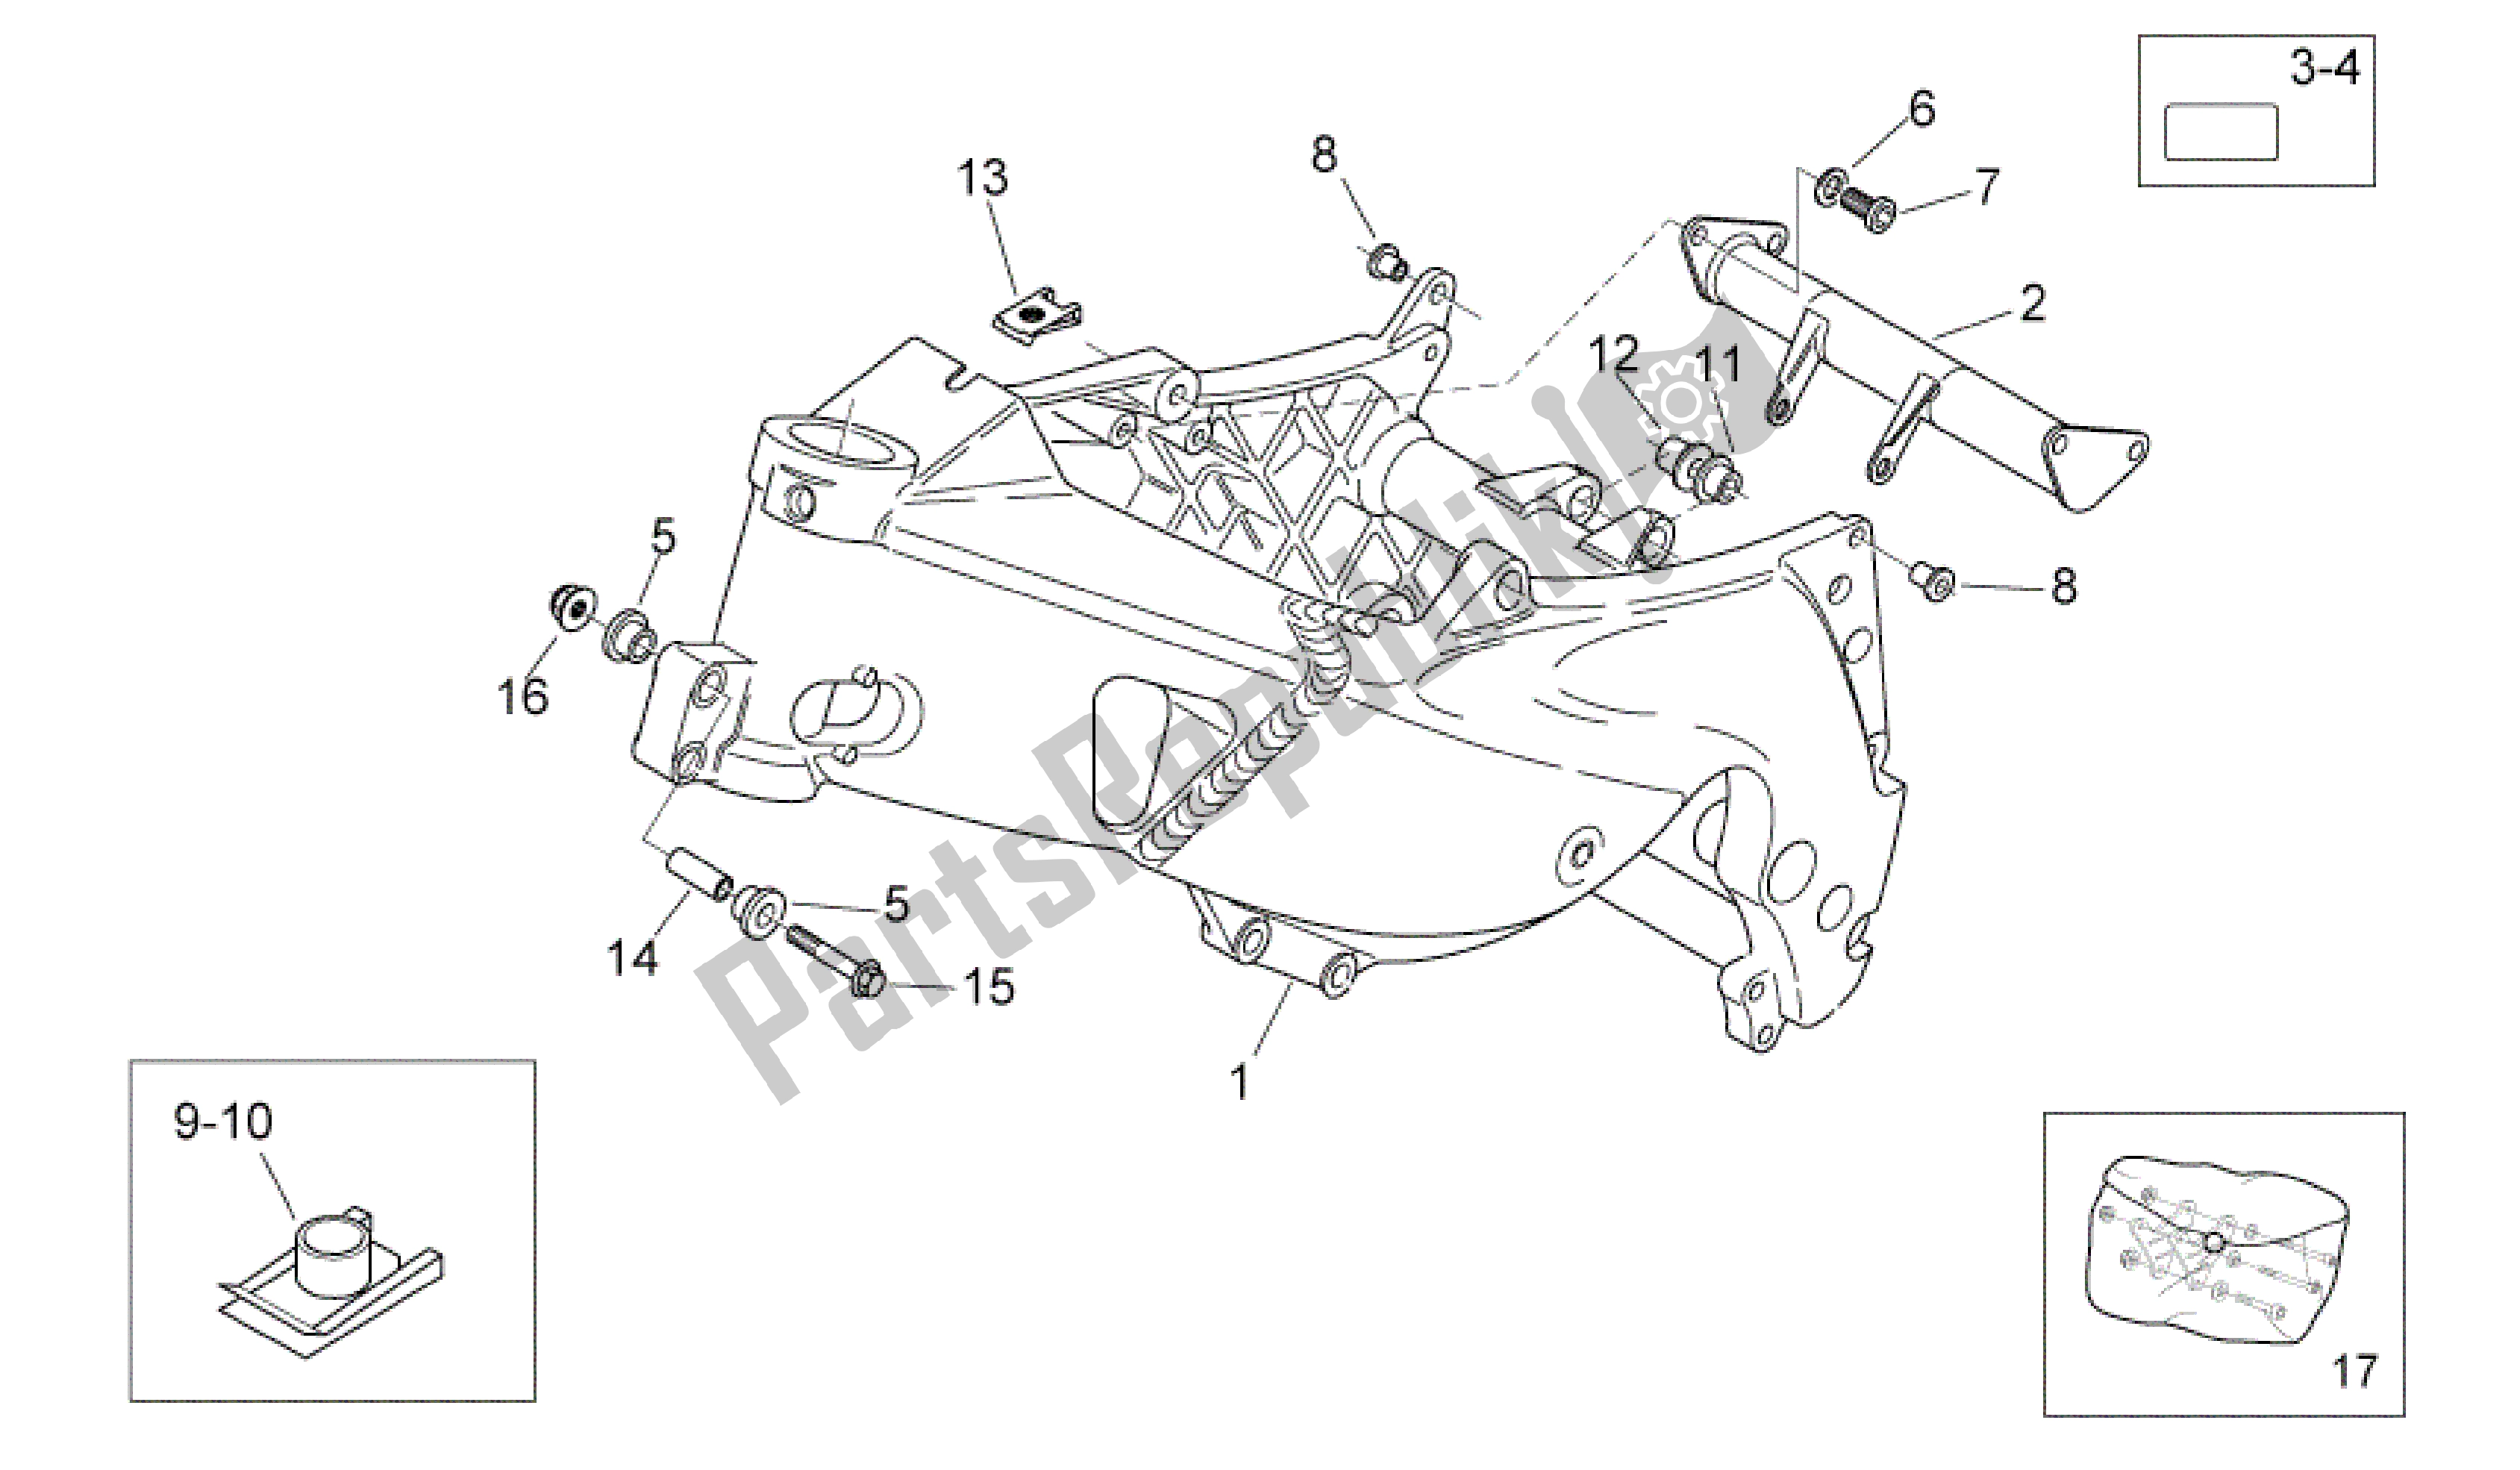 All parts for the Bastidor of the Aprilia RS 125 2006 - 2010